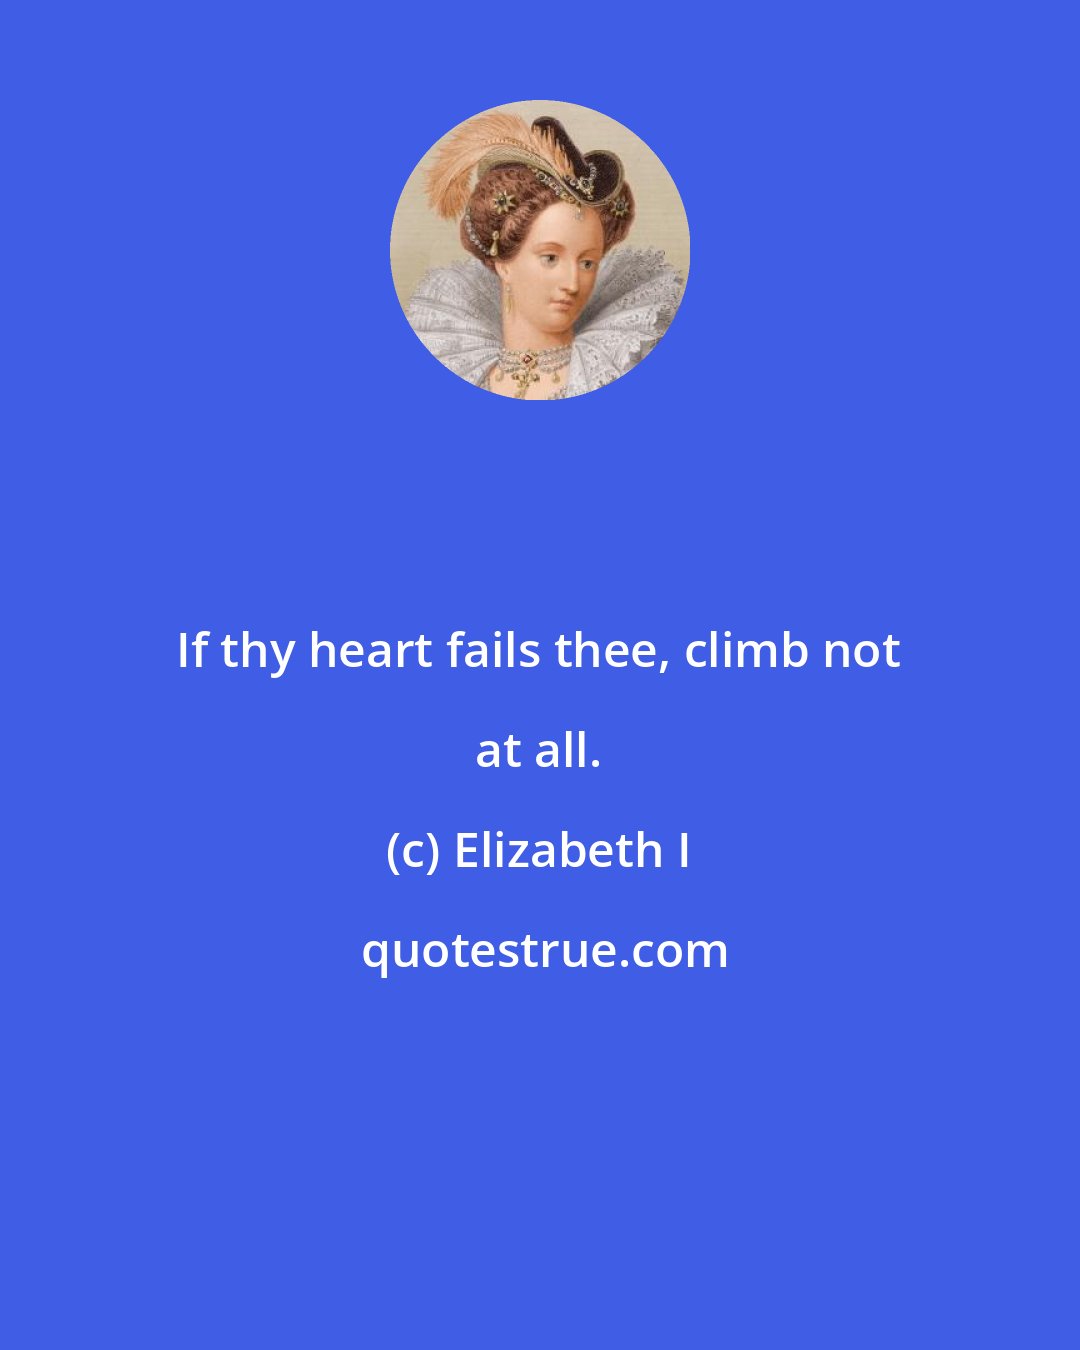 Elizabeth I: If thy heart fails thee, climb not at all.